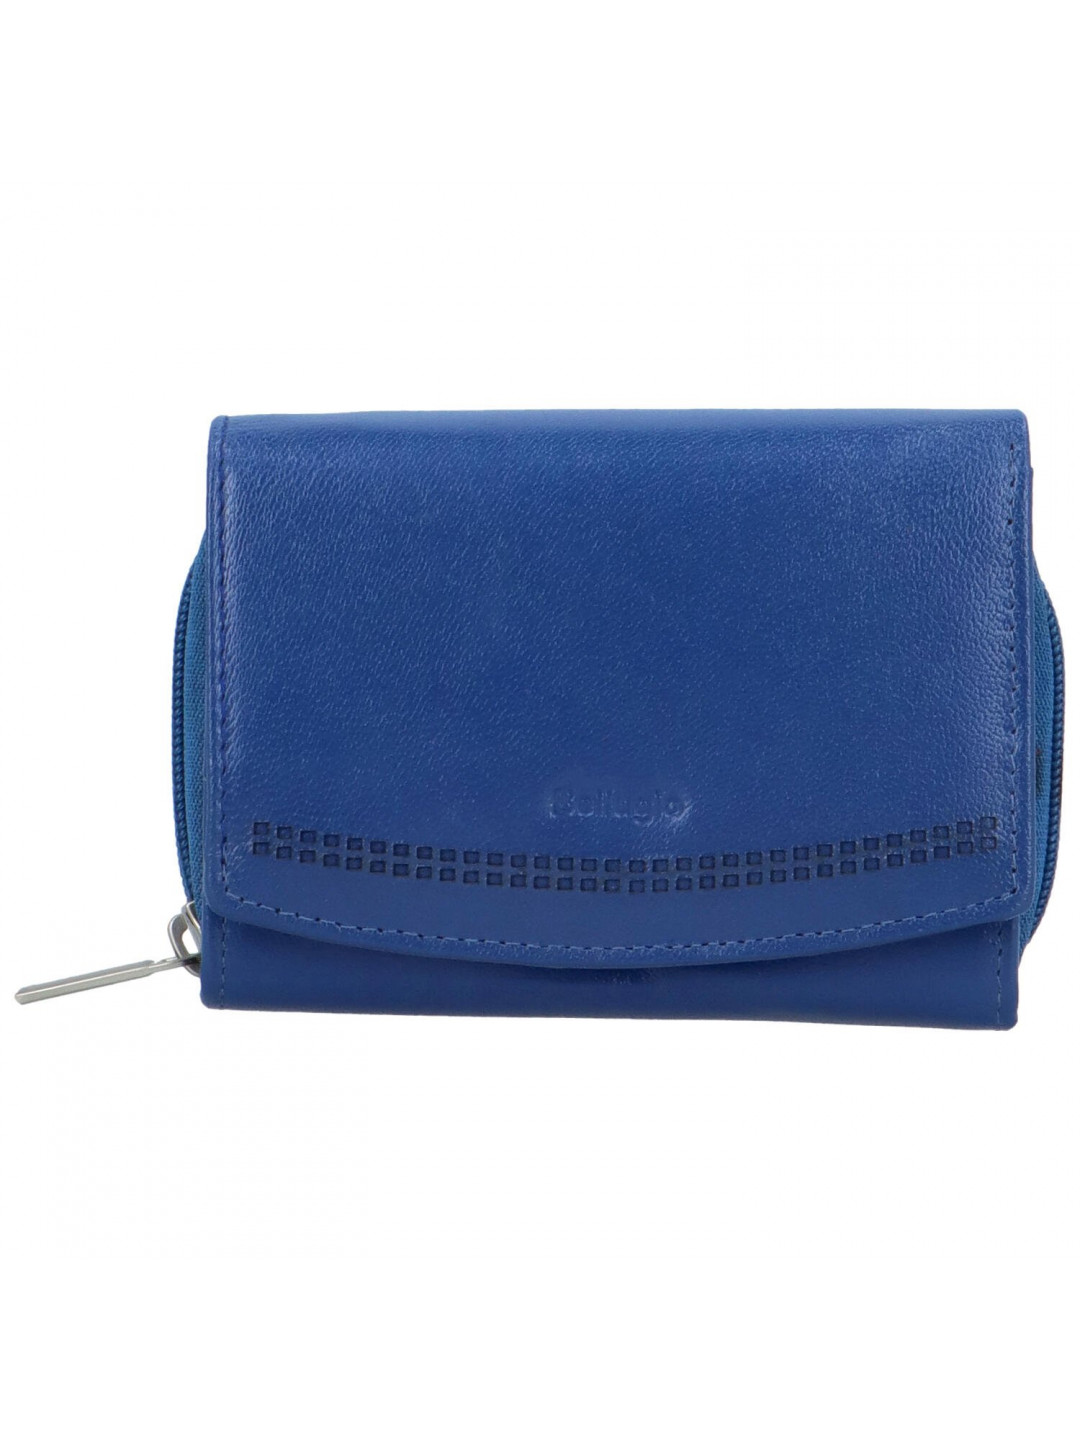 Trendy malá dámská peněženka Bellugio Ingwent modrá